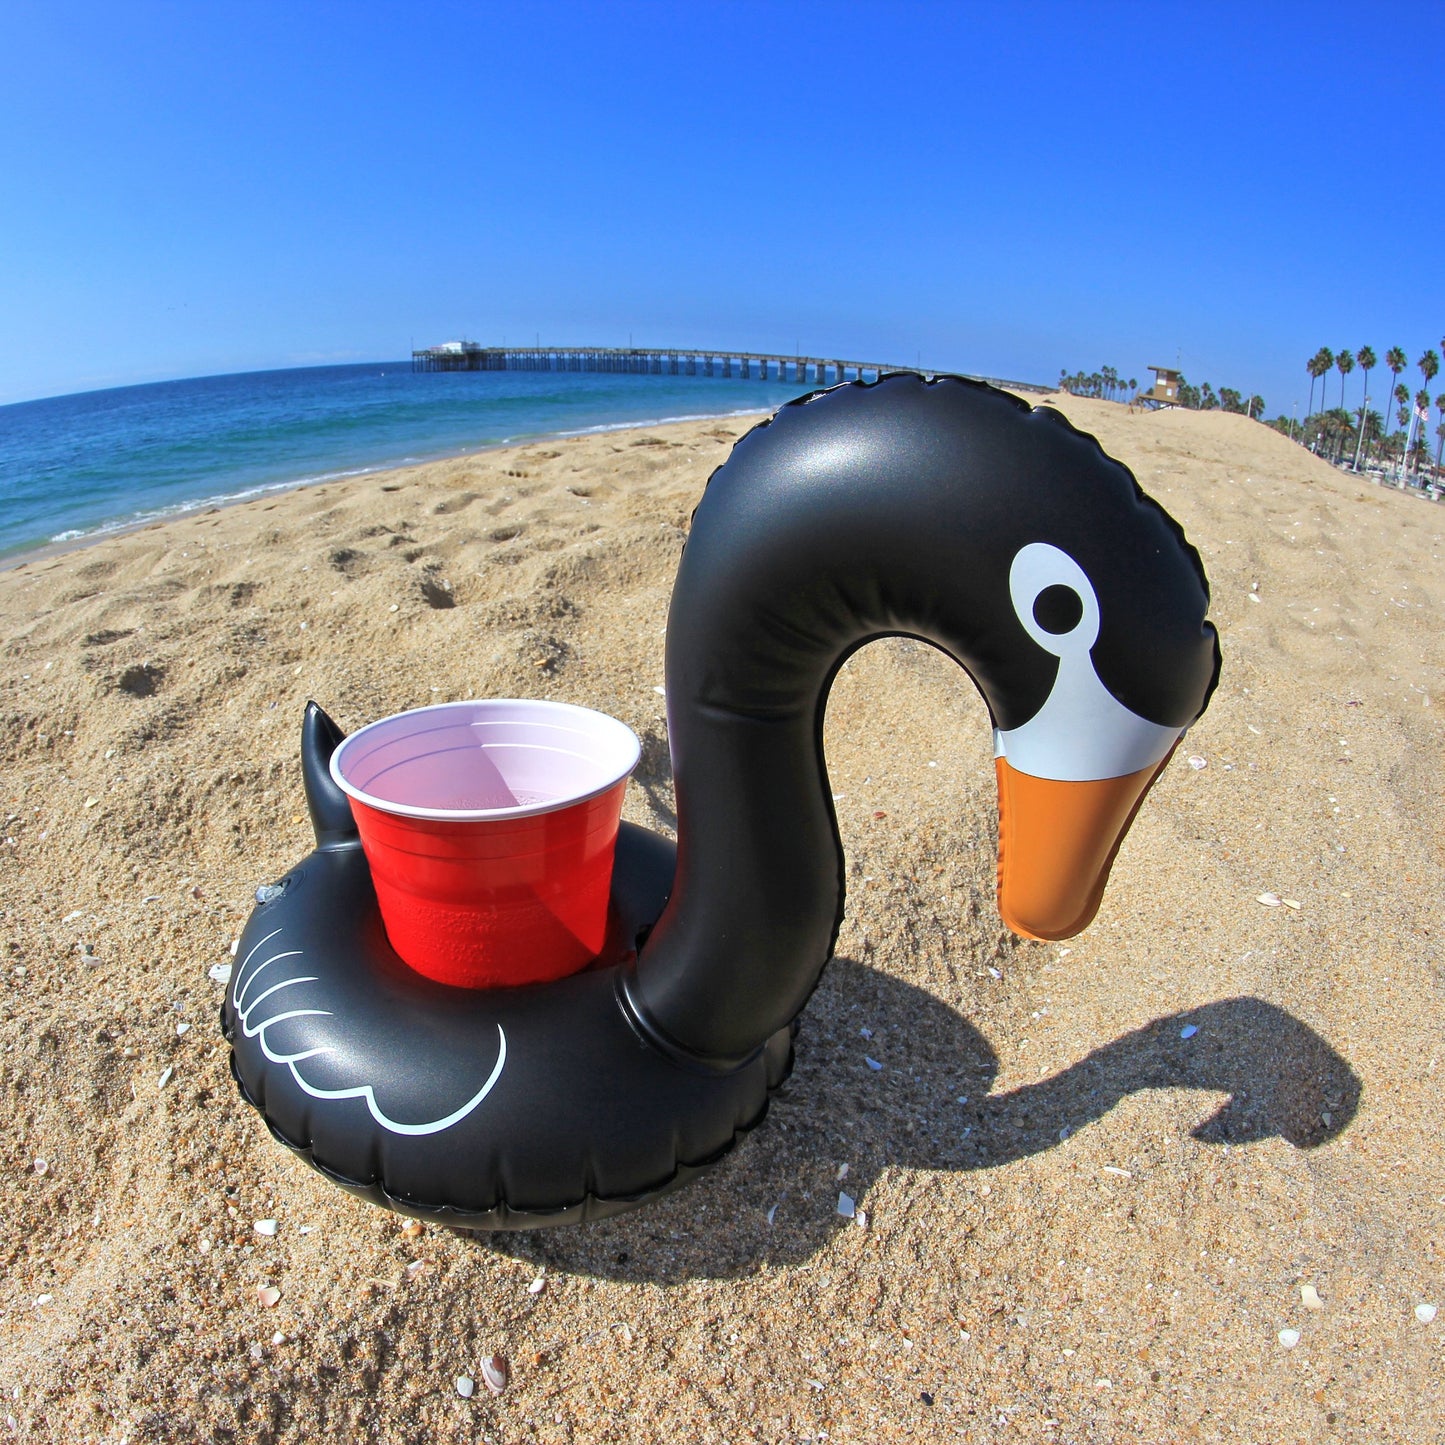 GoFloats Drink Float 3 Pack Black Swan